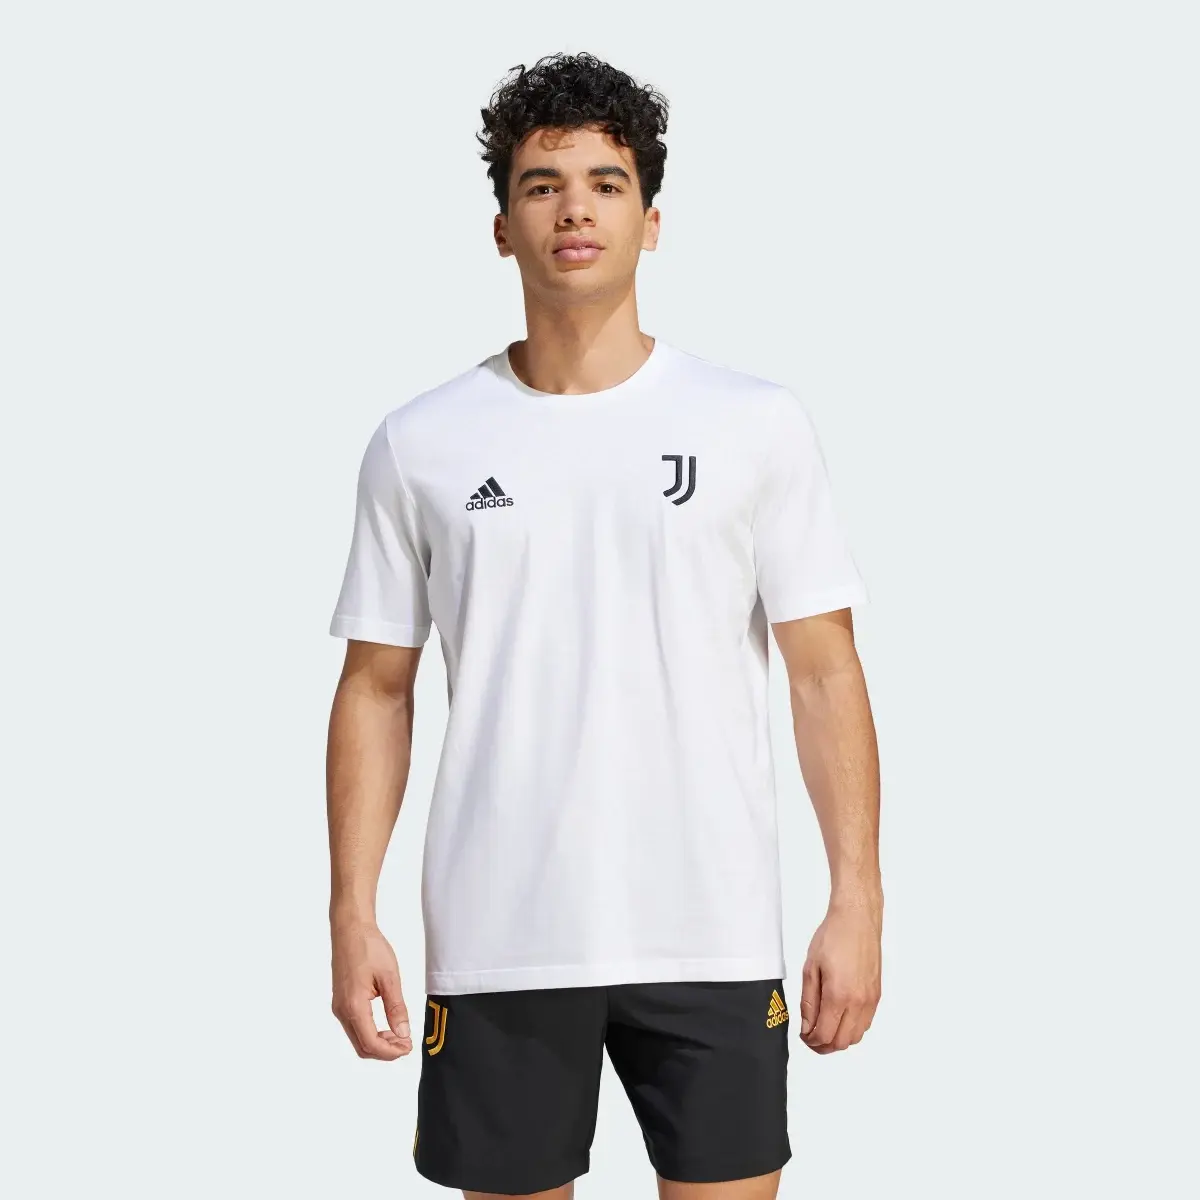 Adidas T-shirt Juventus DNA. 2